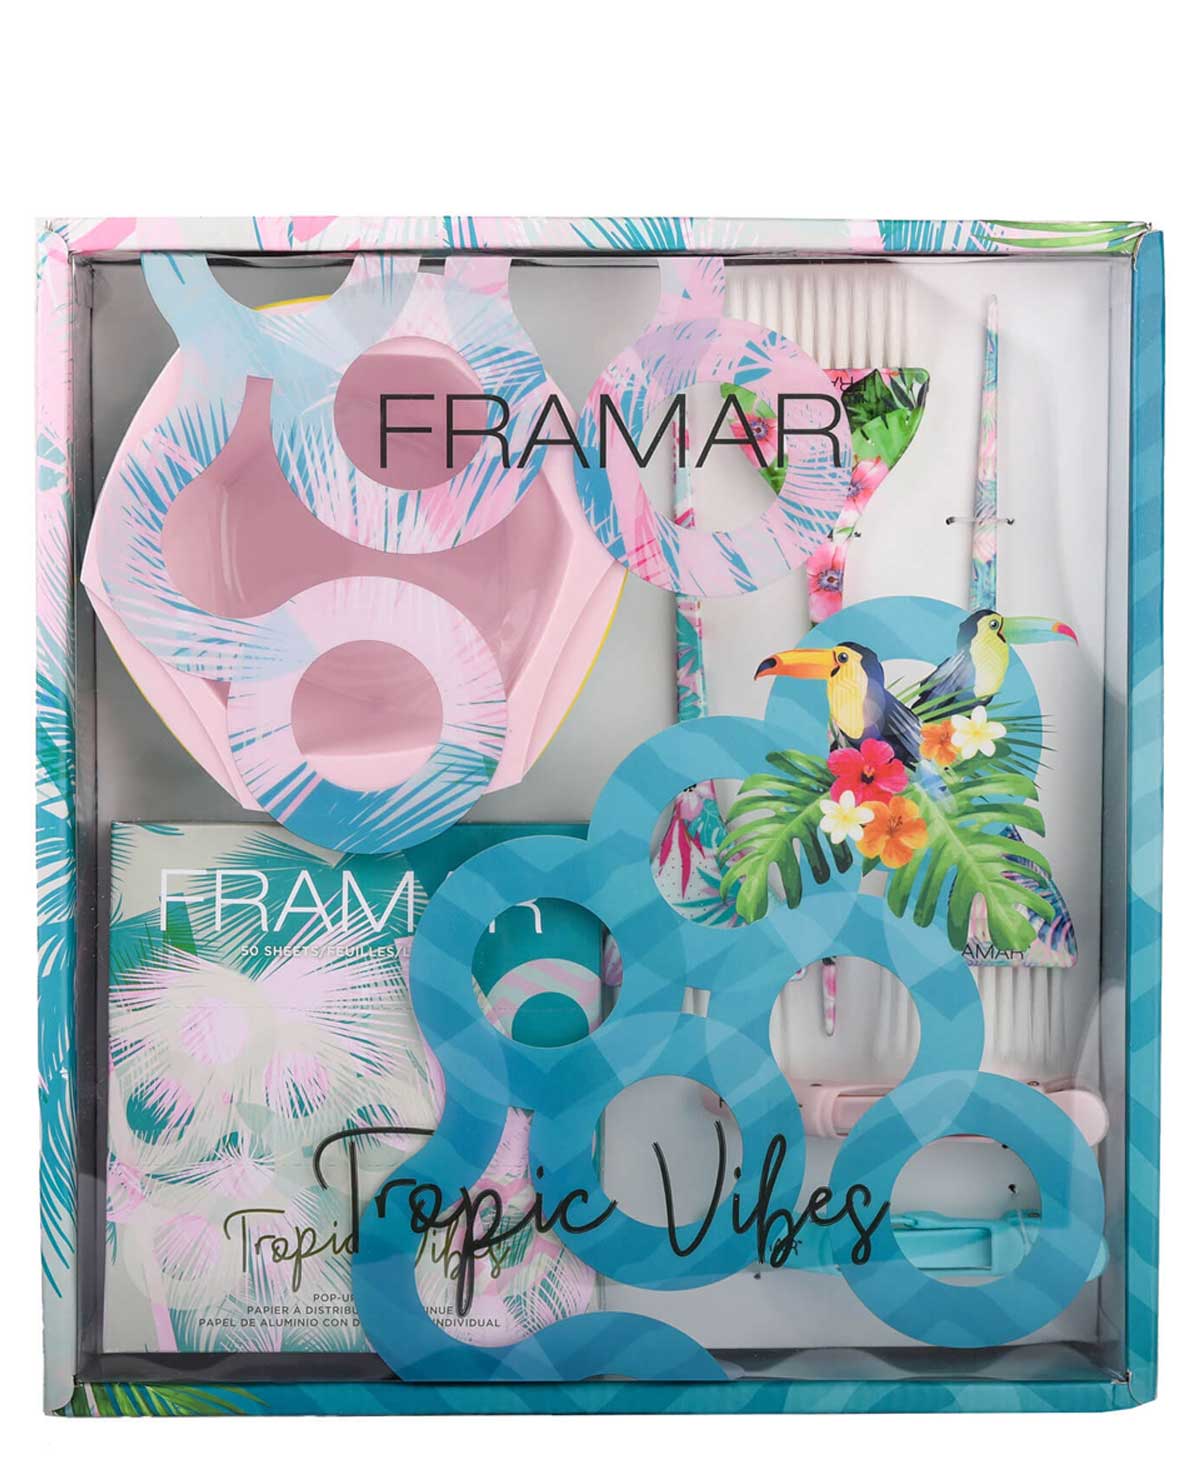 Framar Tropic Vibes Colorist Kit - Limited Edition